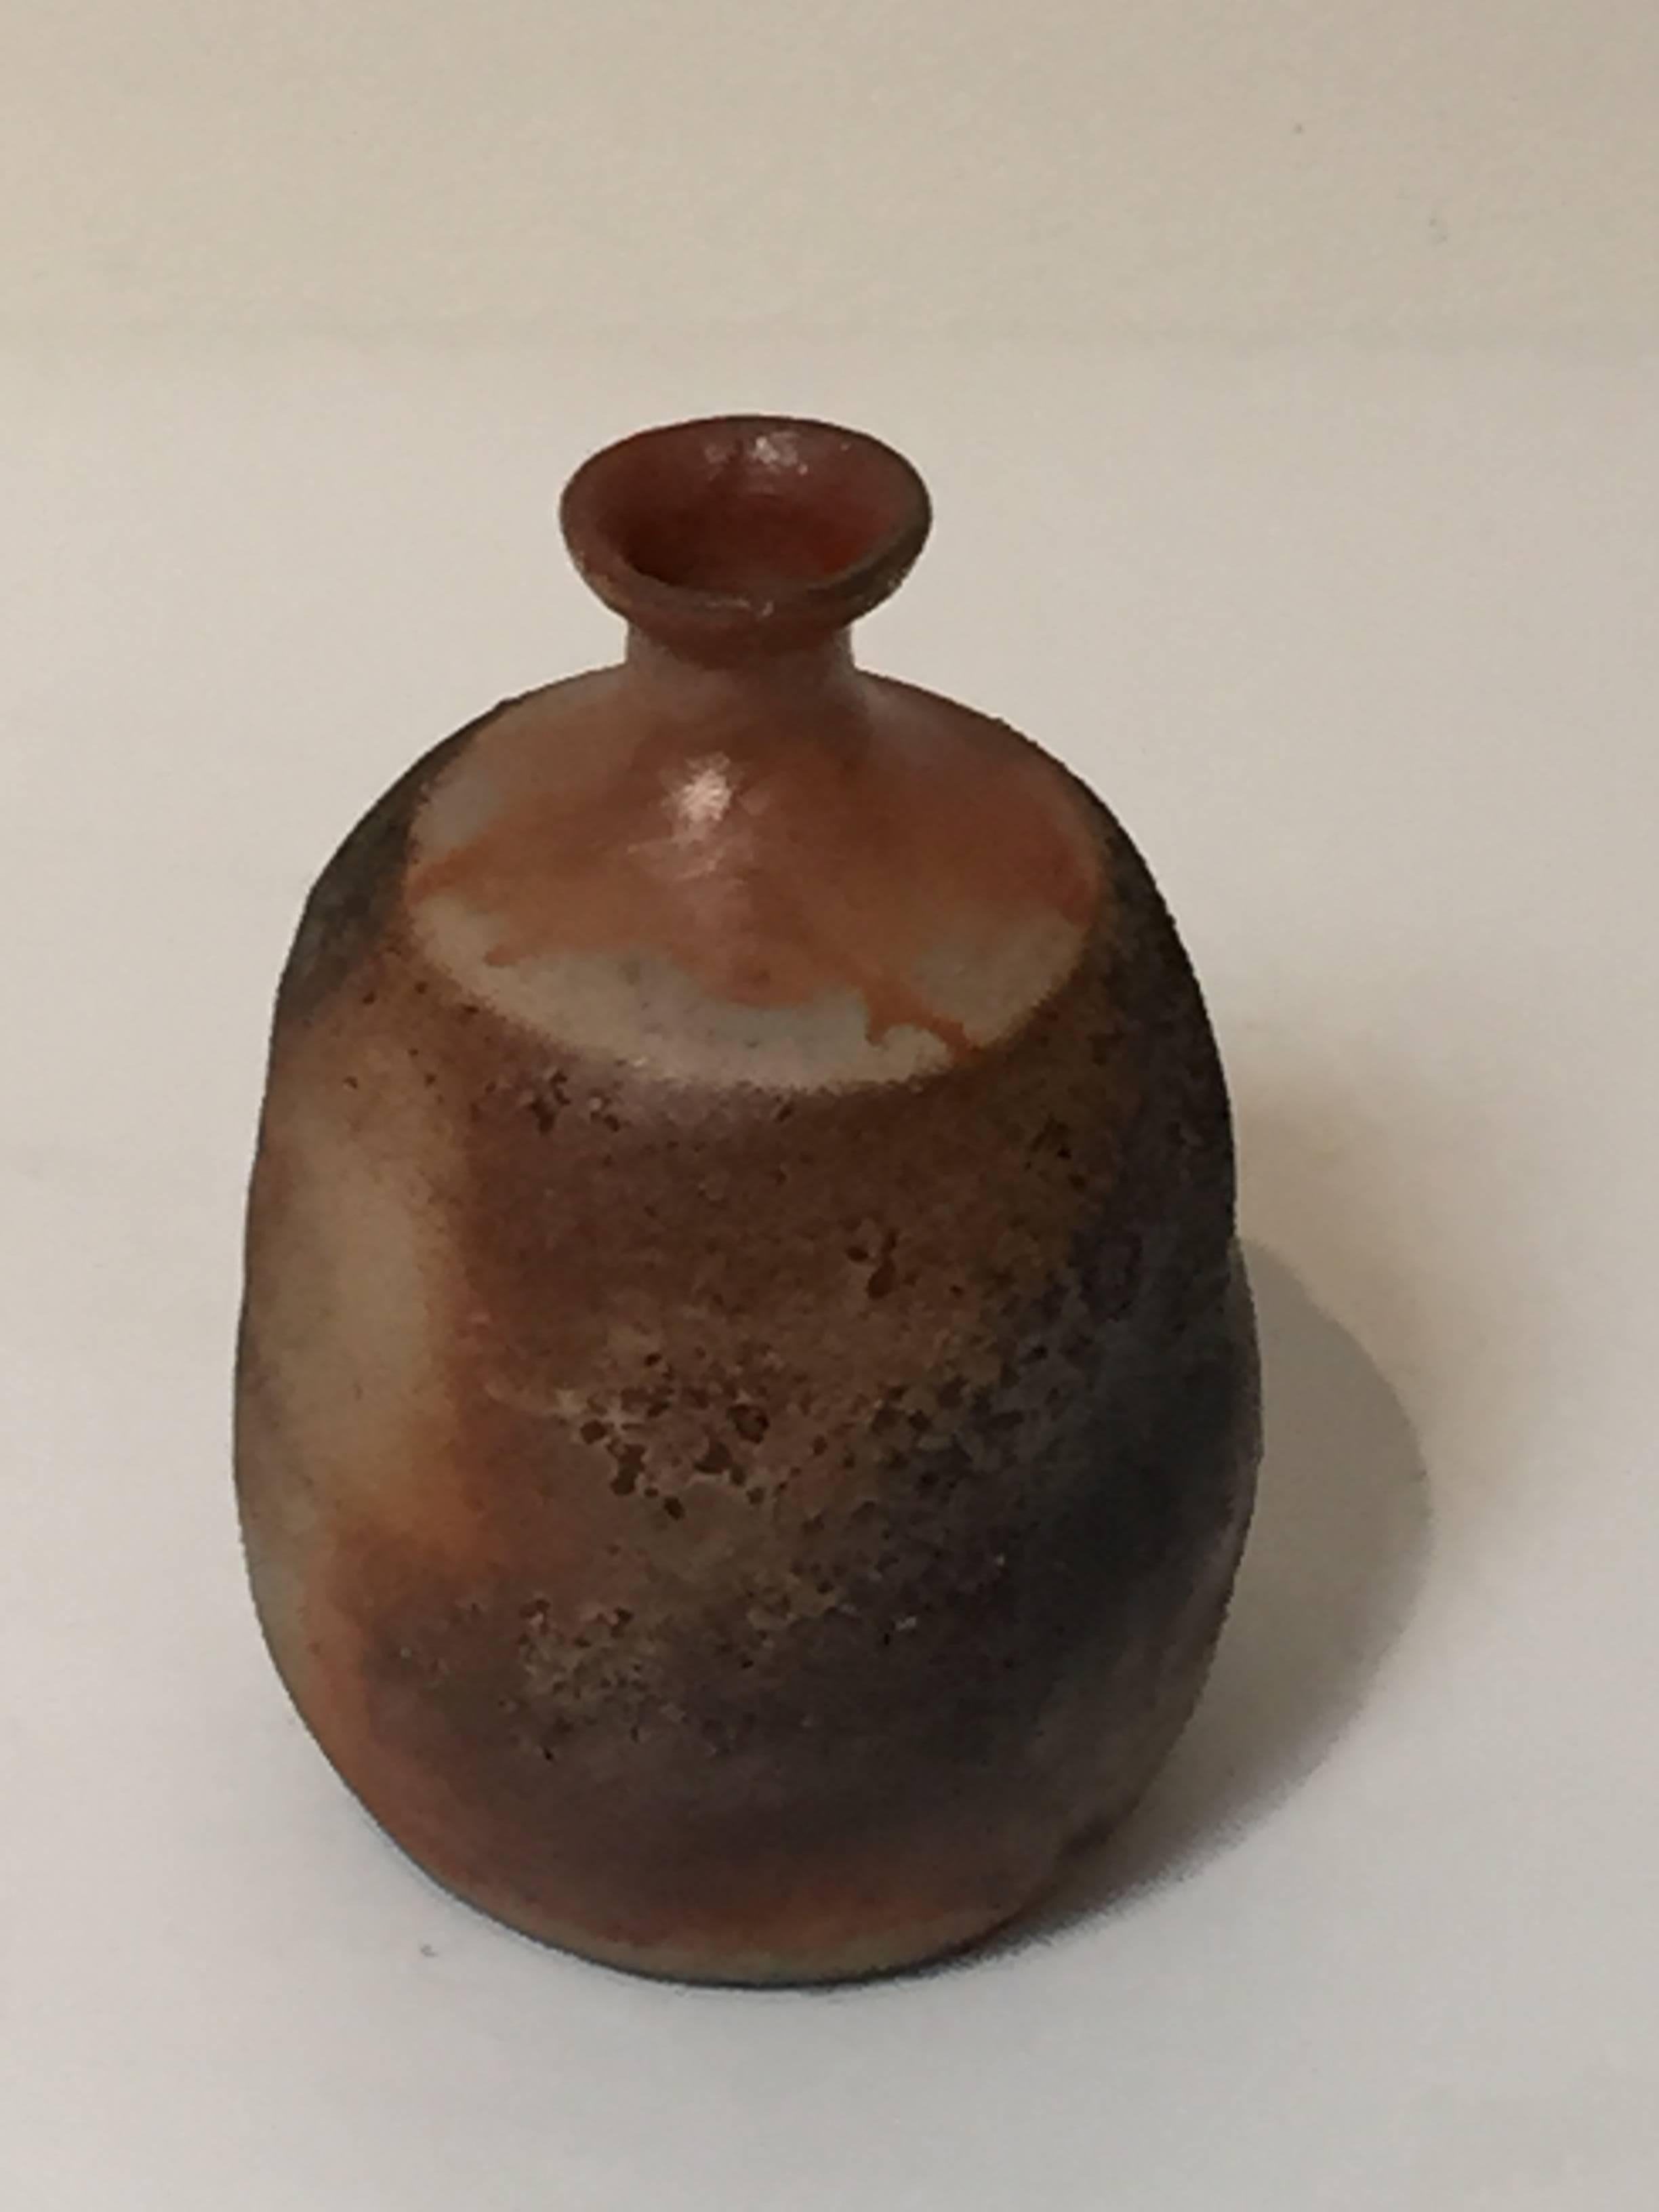 Contemporary Wood Fired Sake Flask by Bizen Potter Hiroyuki Wakimoto For Sale 1